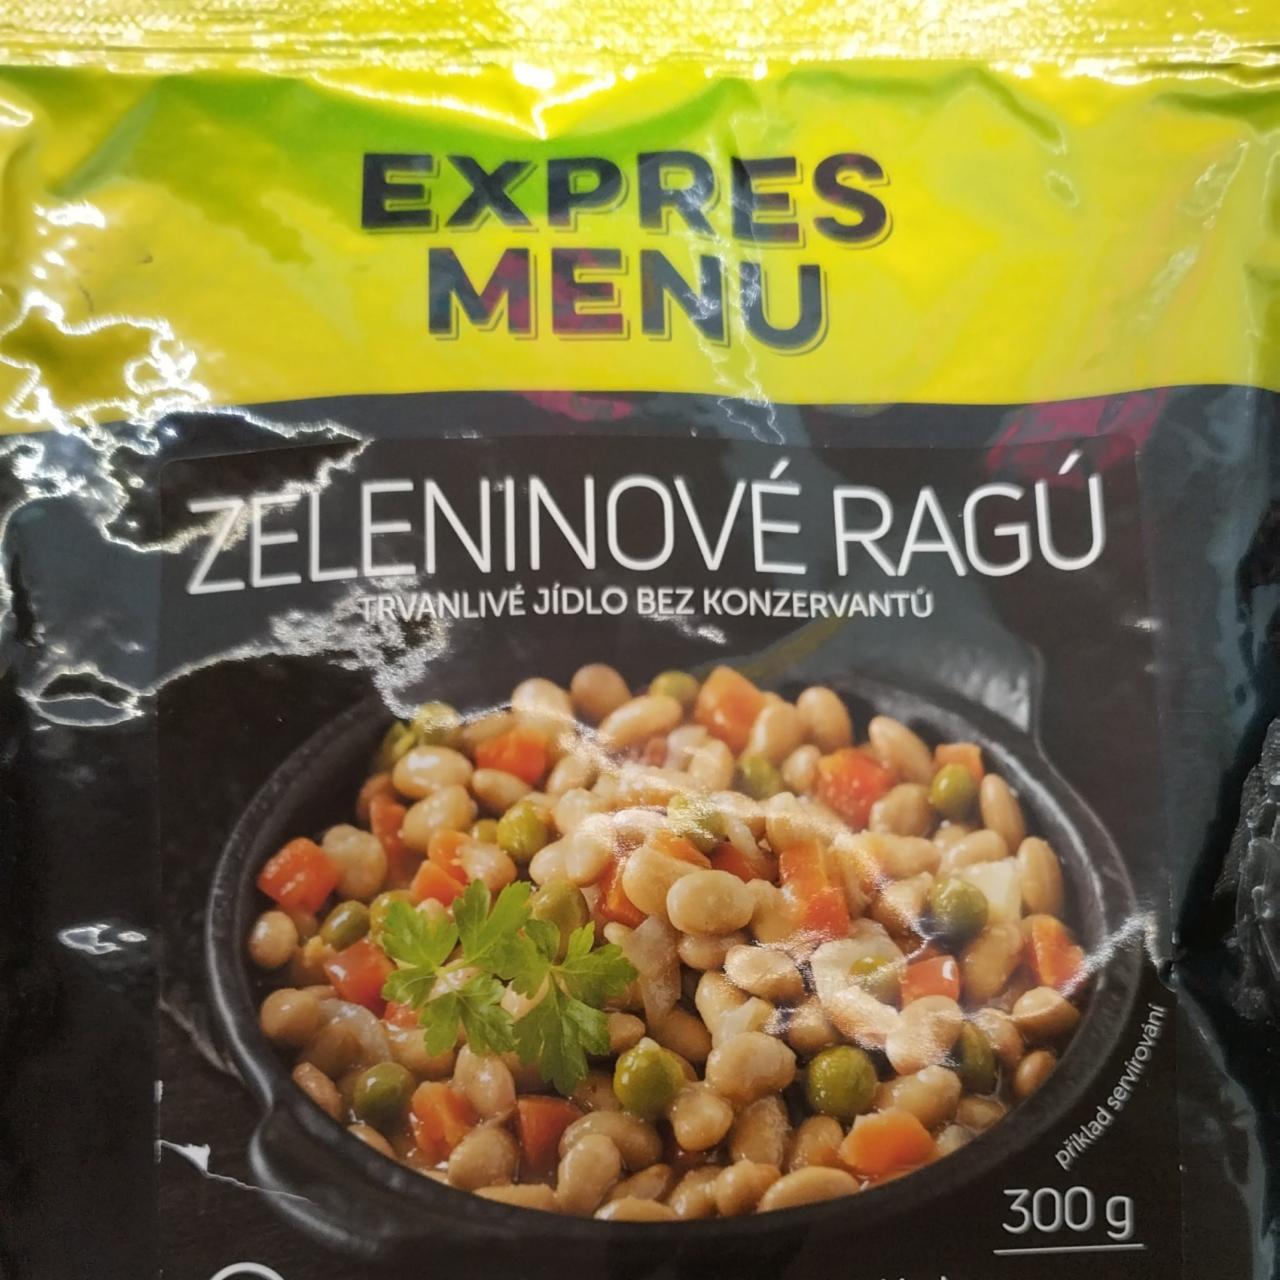 Fotografie - Zeleninové ragů Expres menu